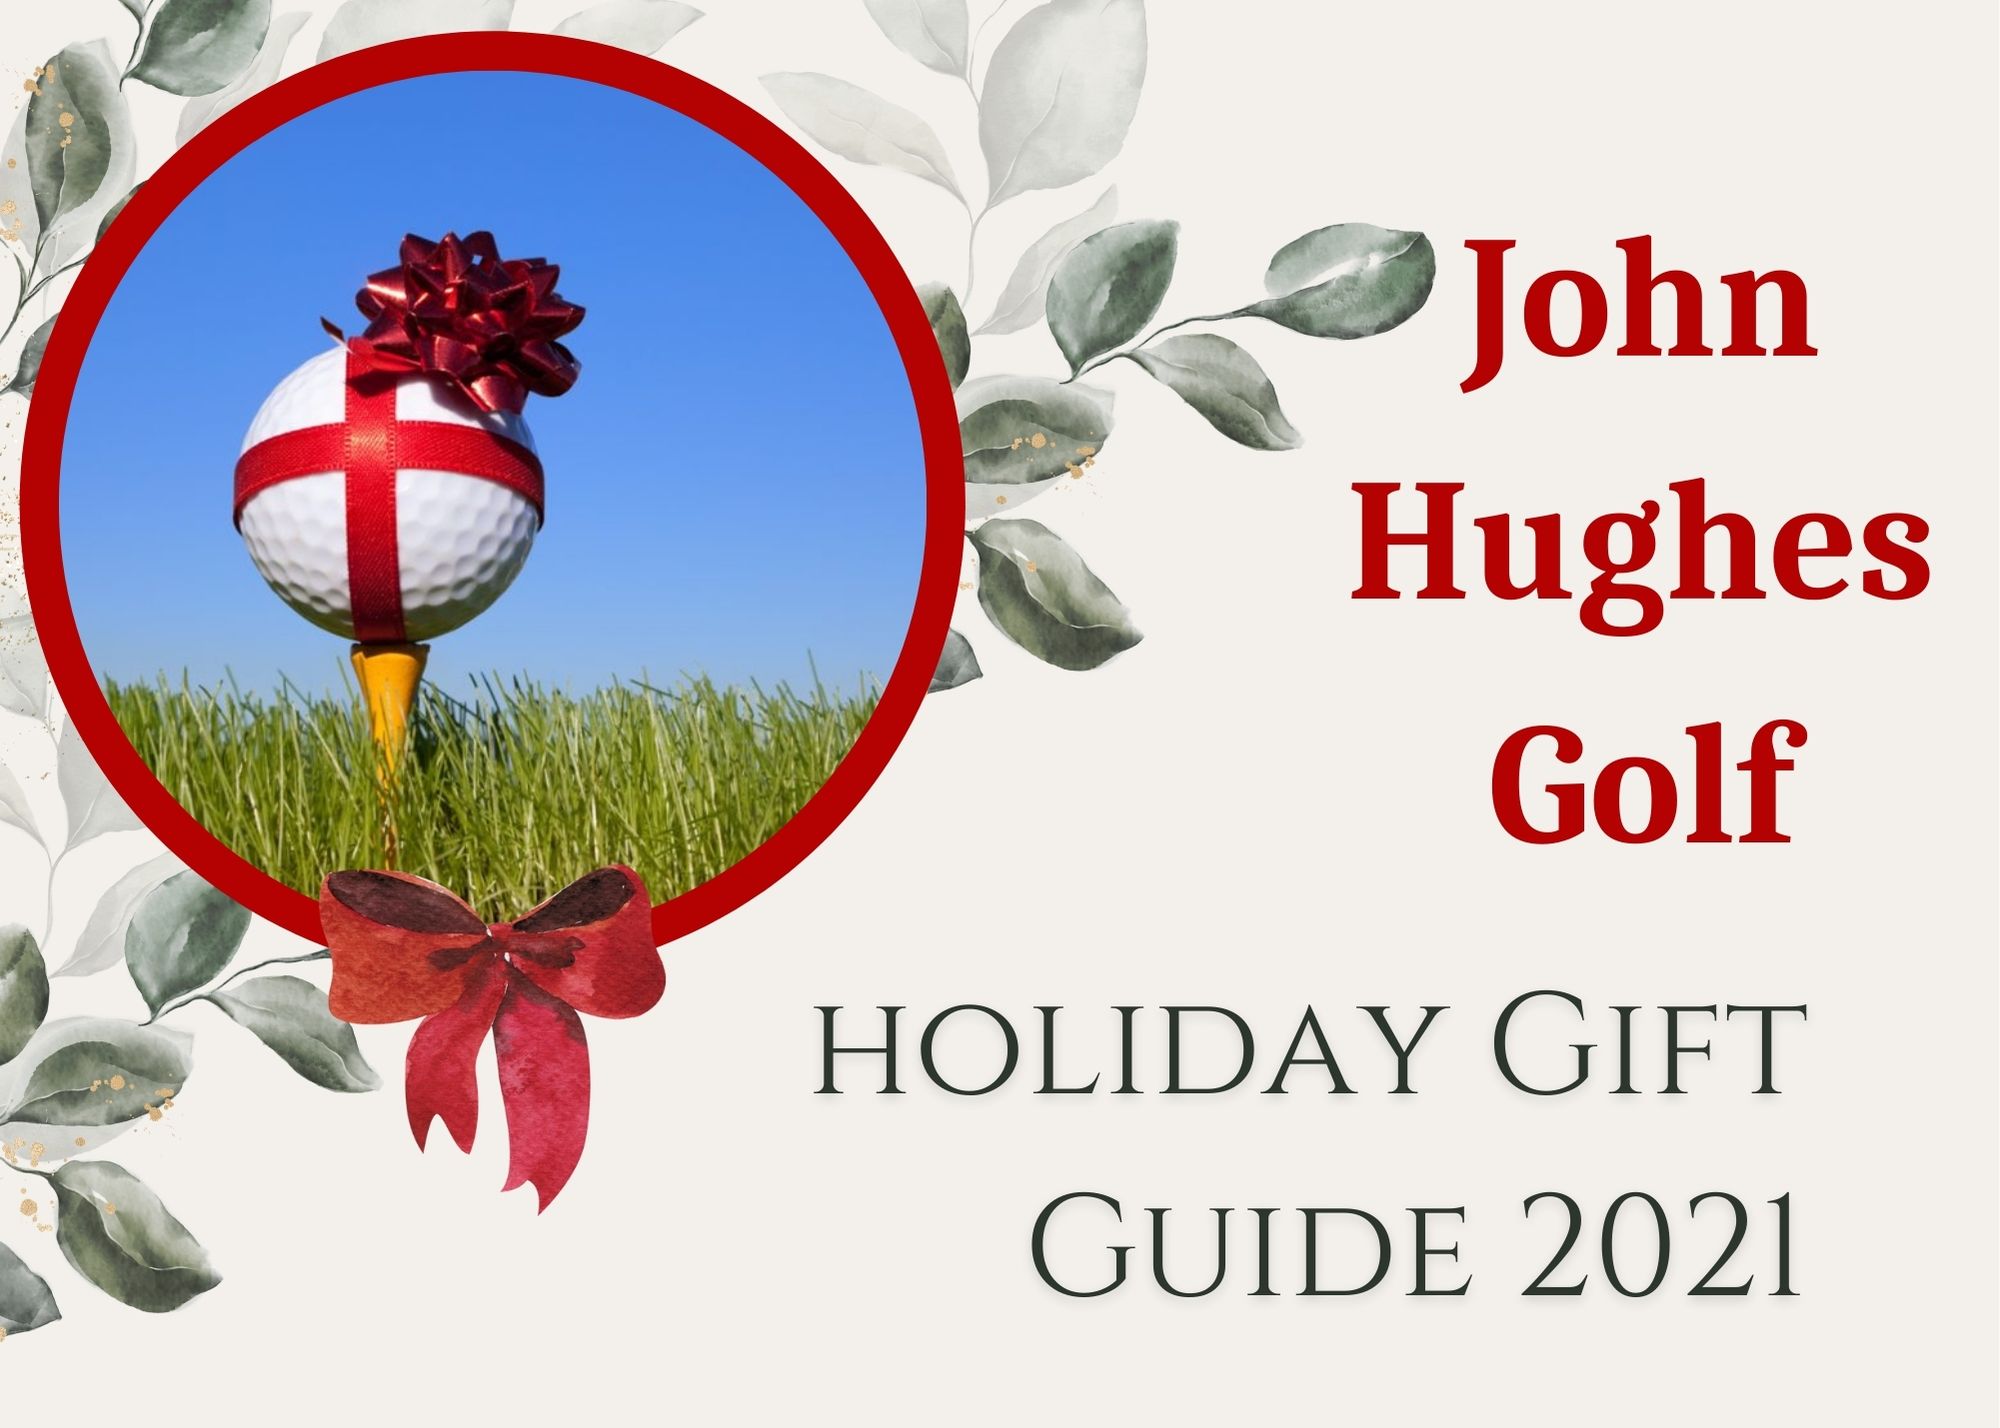 John Hughes Golf Holiday Gift Guide 2021, Orlando Golf Schools, Golf Schools in Orlando FL, Mevo+, Arccos, Speed Sticks, TheStack System, Golf Skills Evaluation, McLemore, Punta Cana Resort and Club